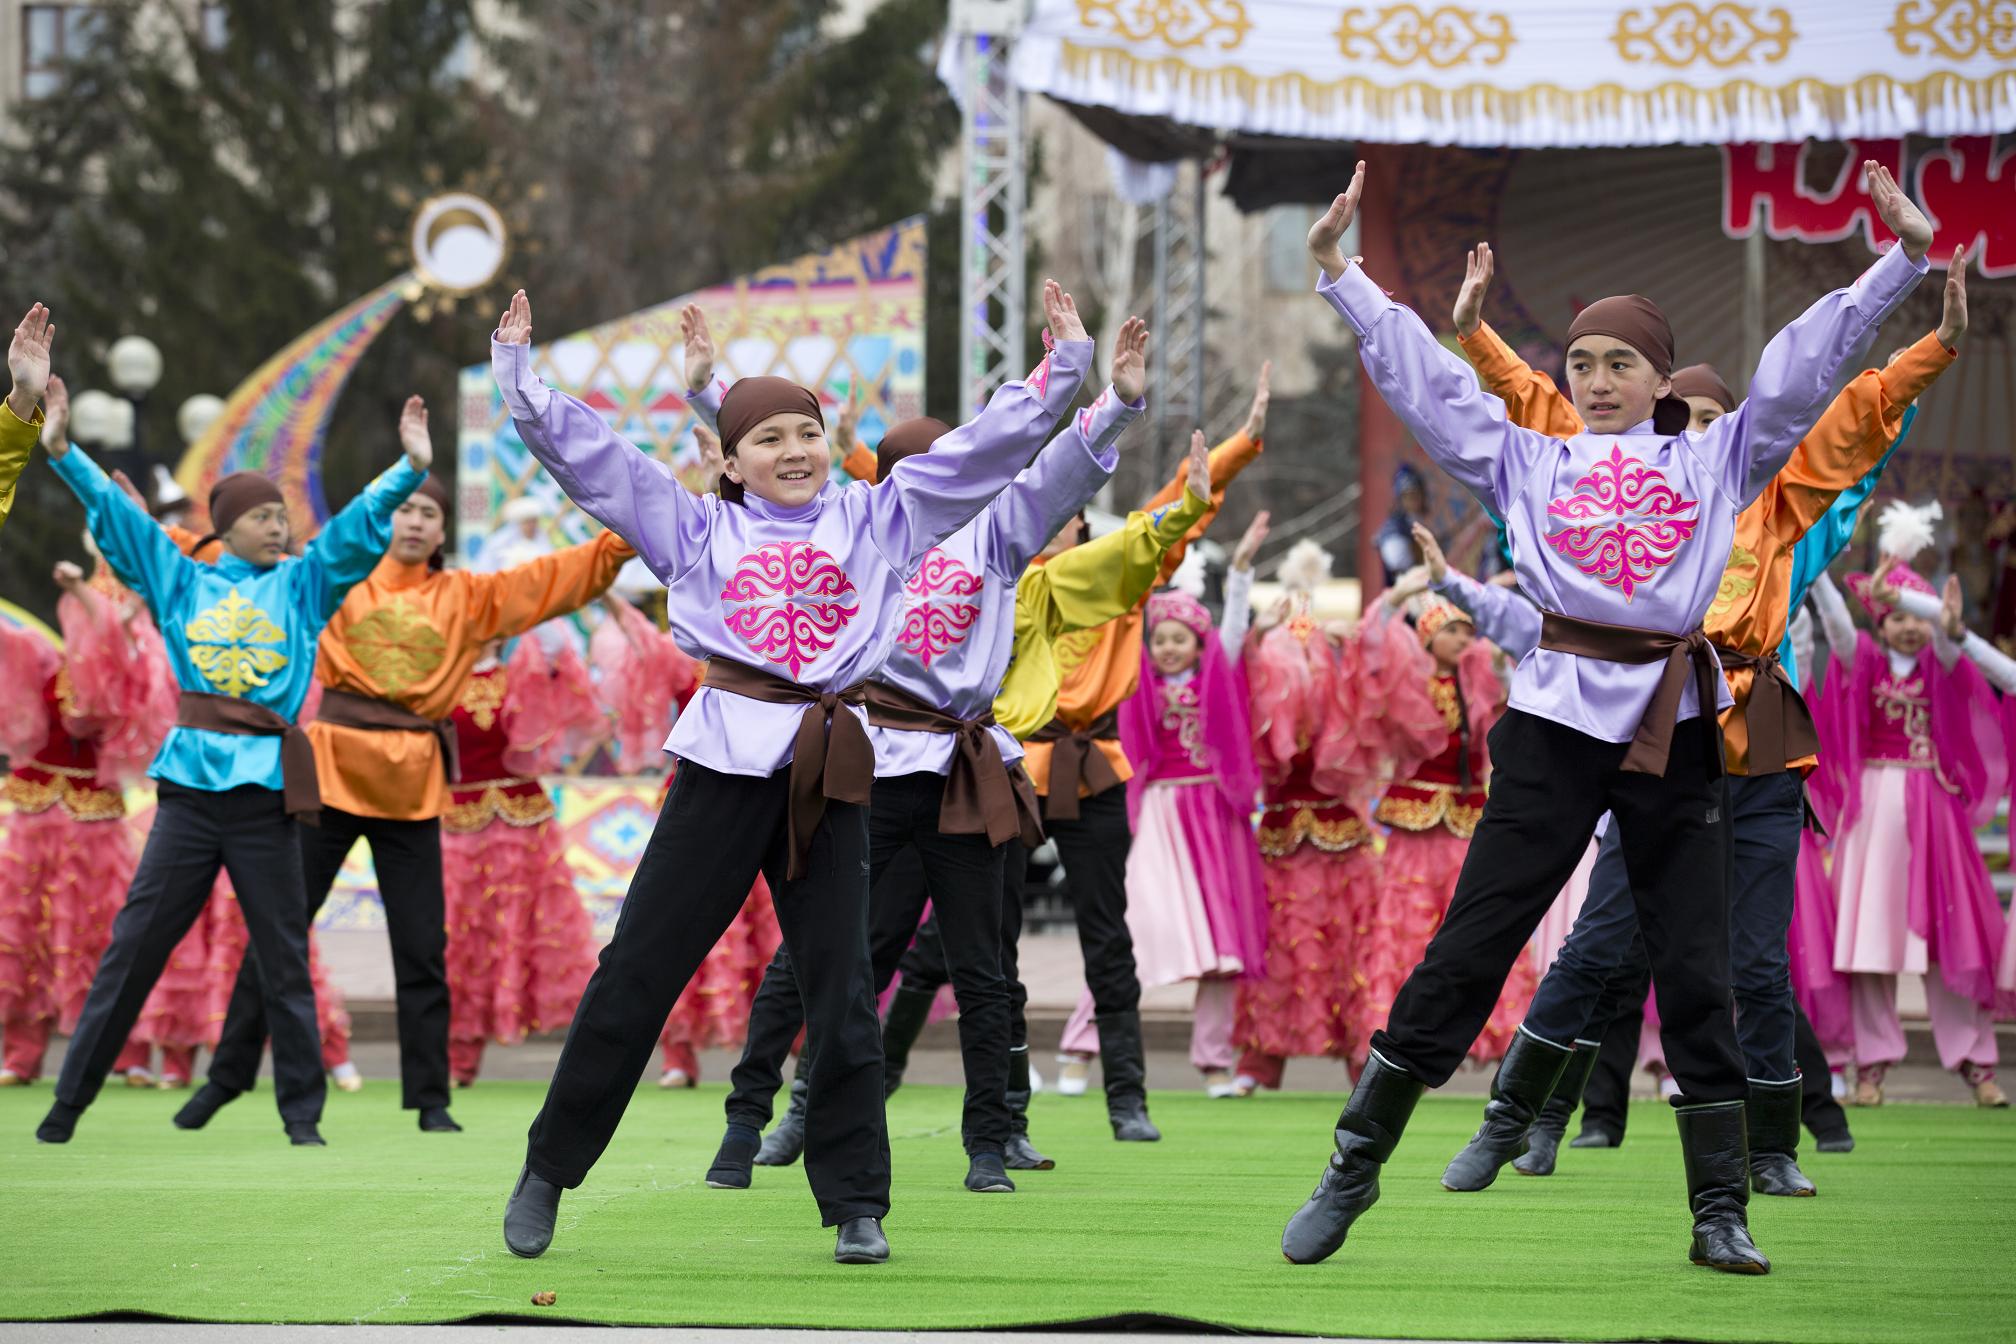 Kazakhstan Celebrates Nauryz - The Astana Times